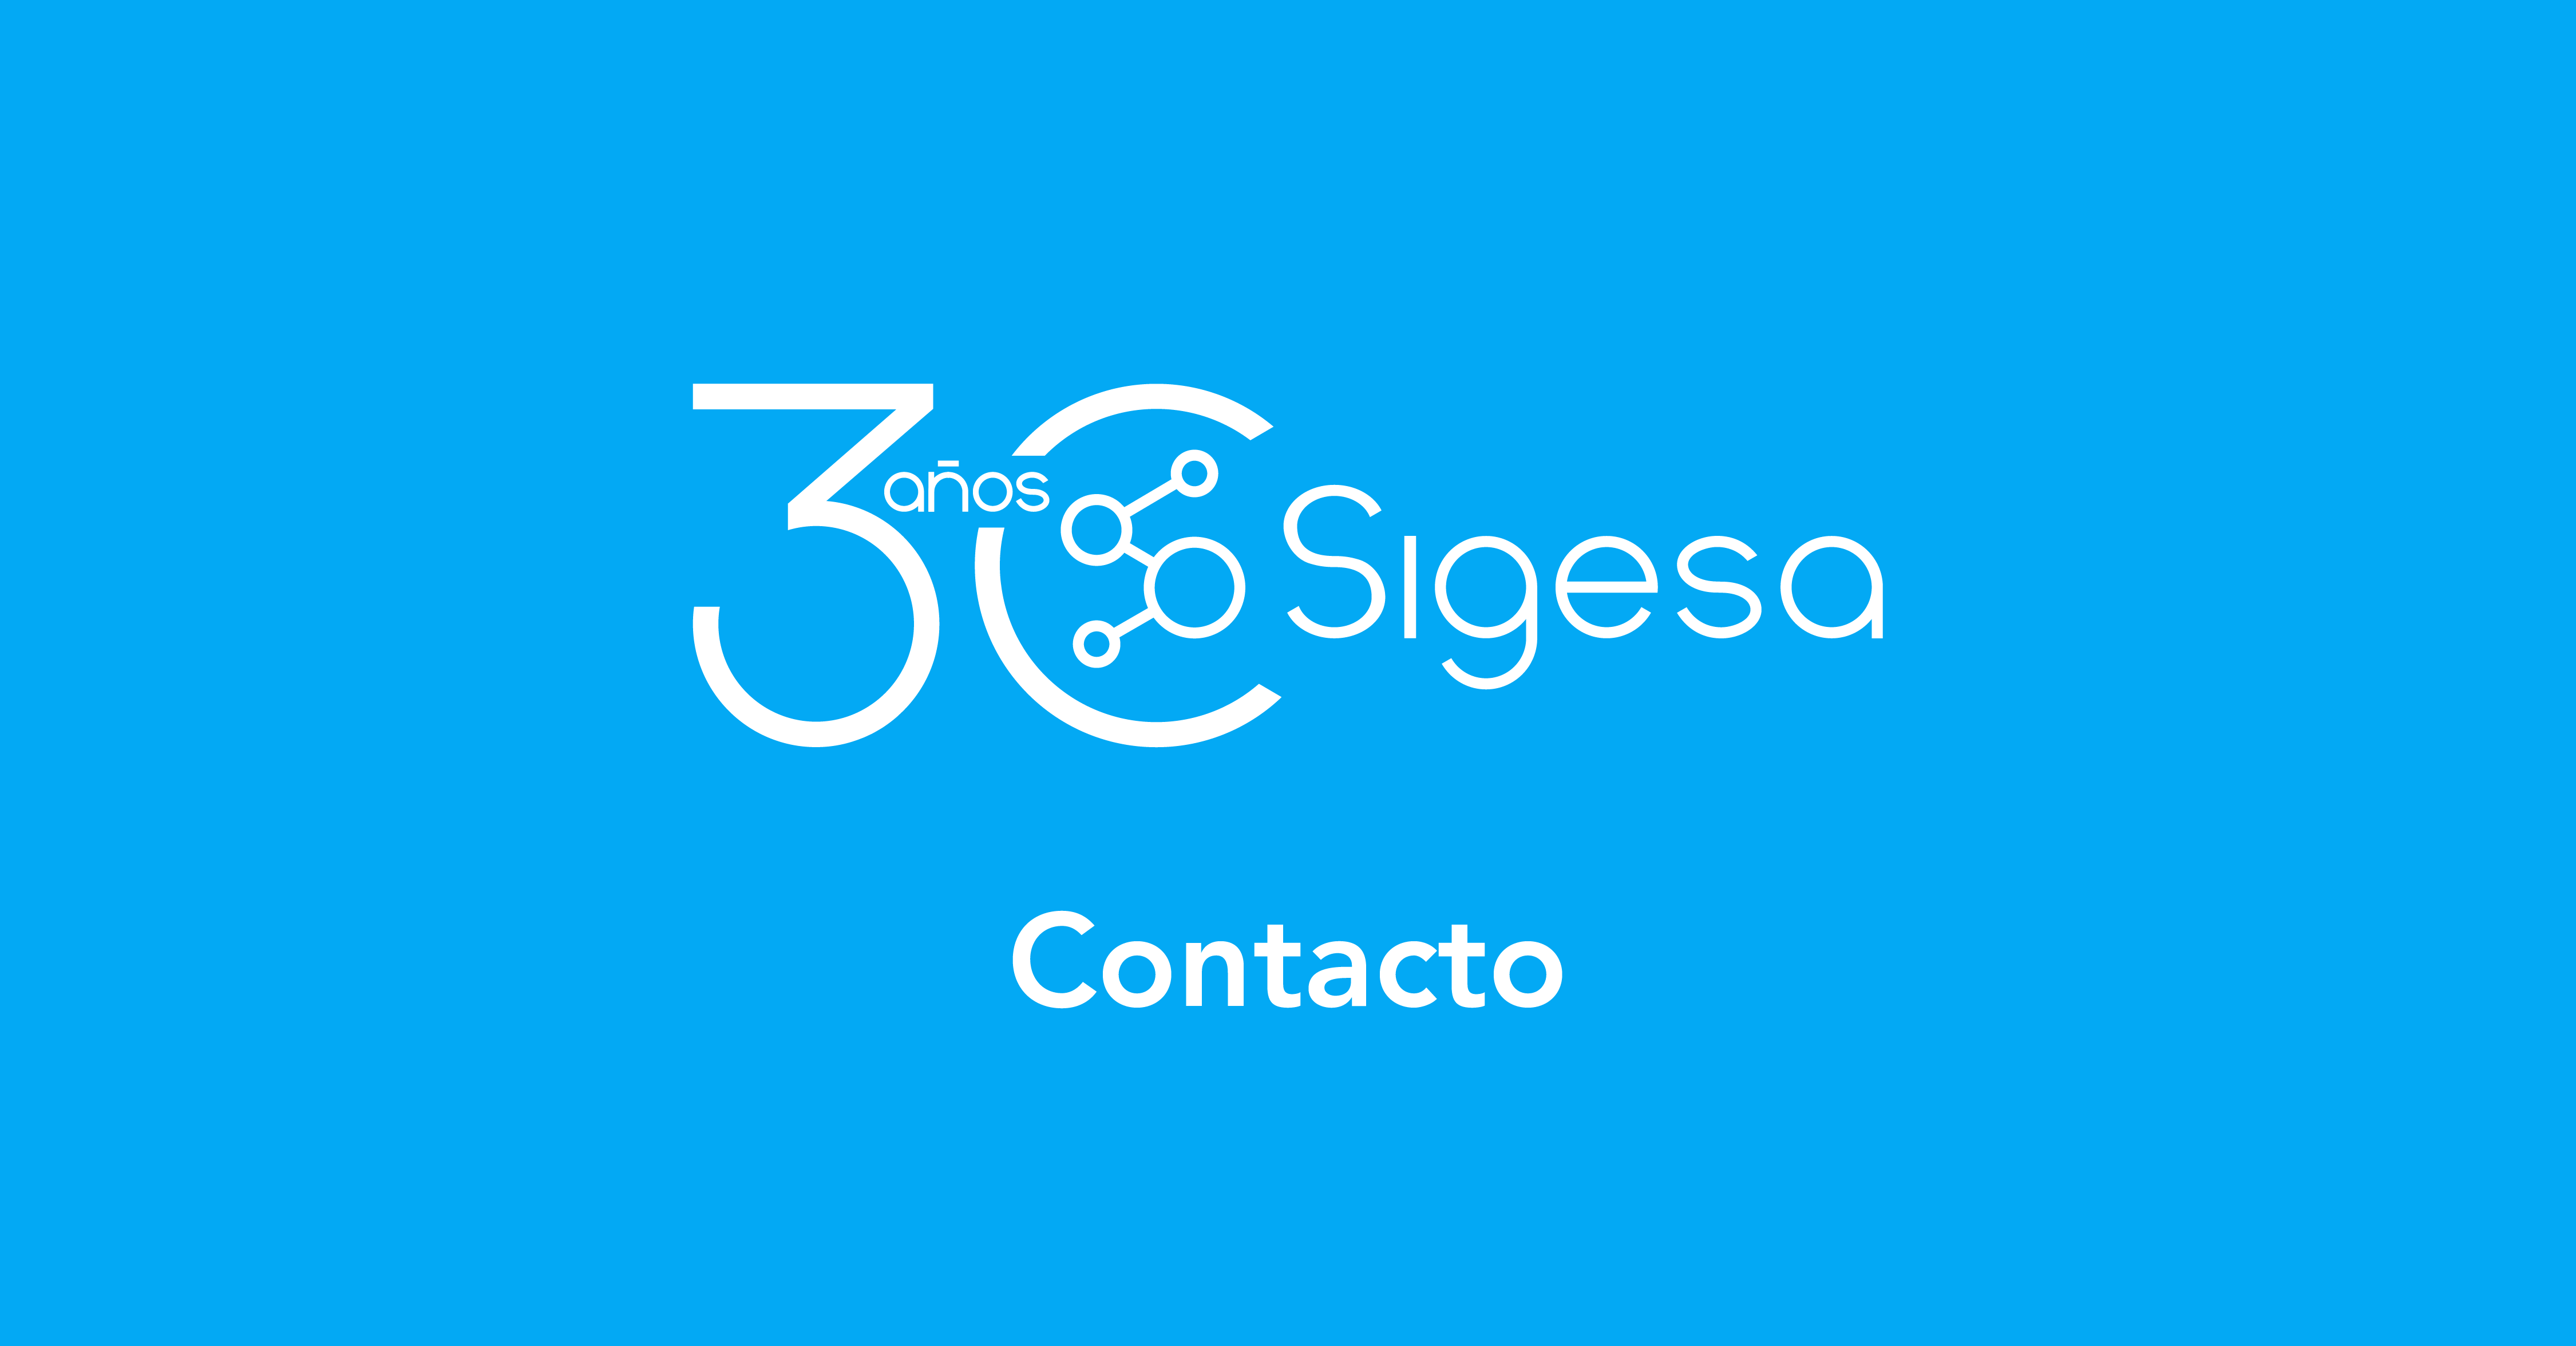 Sigesa Contacto